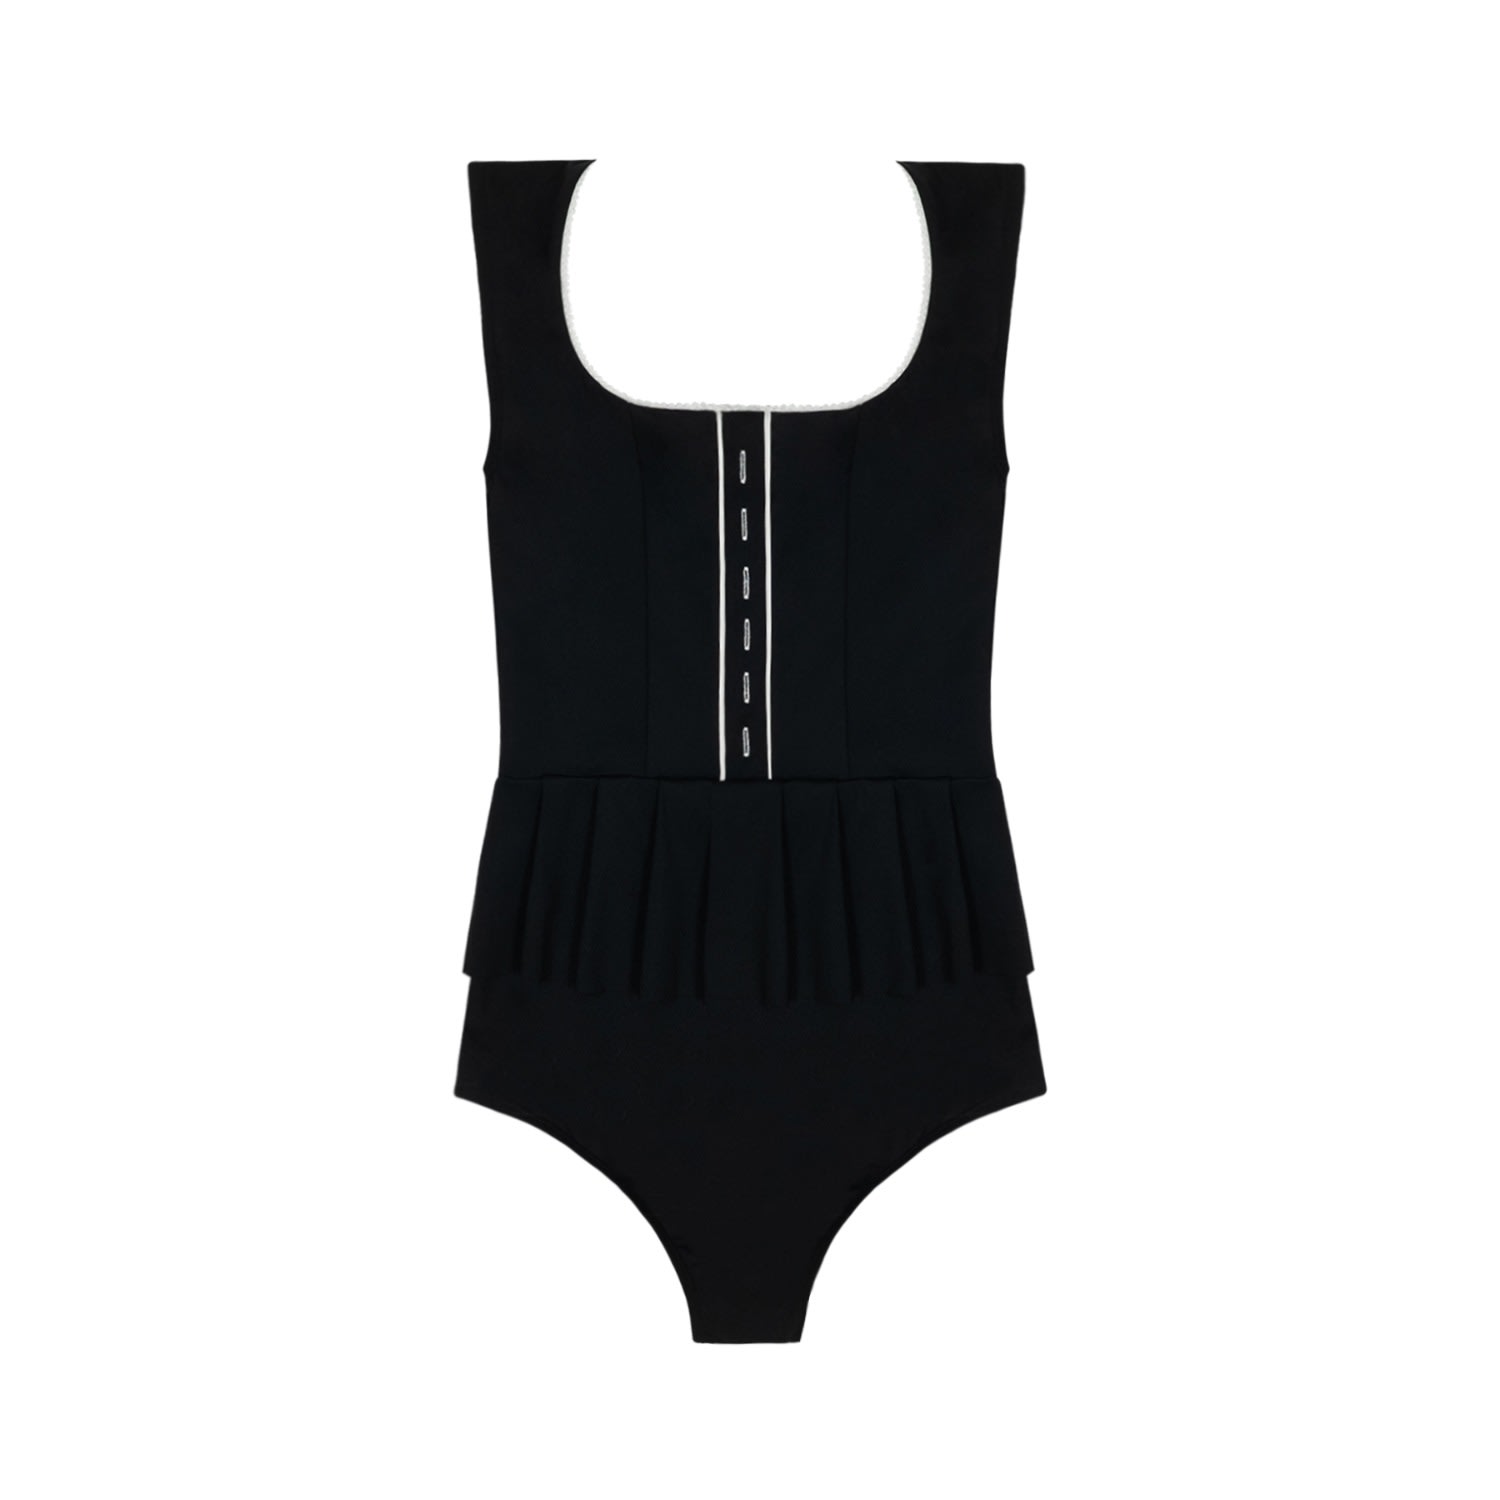 Women's Vintage Style One Piece Swimwear - Black Medium QUA VINO